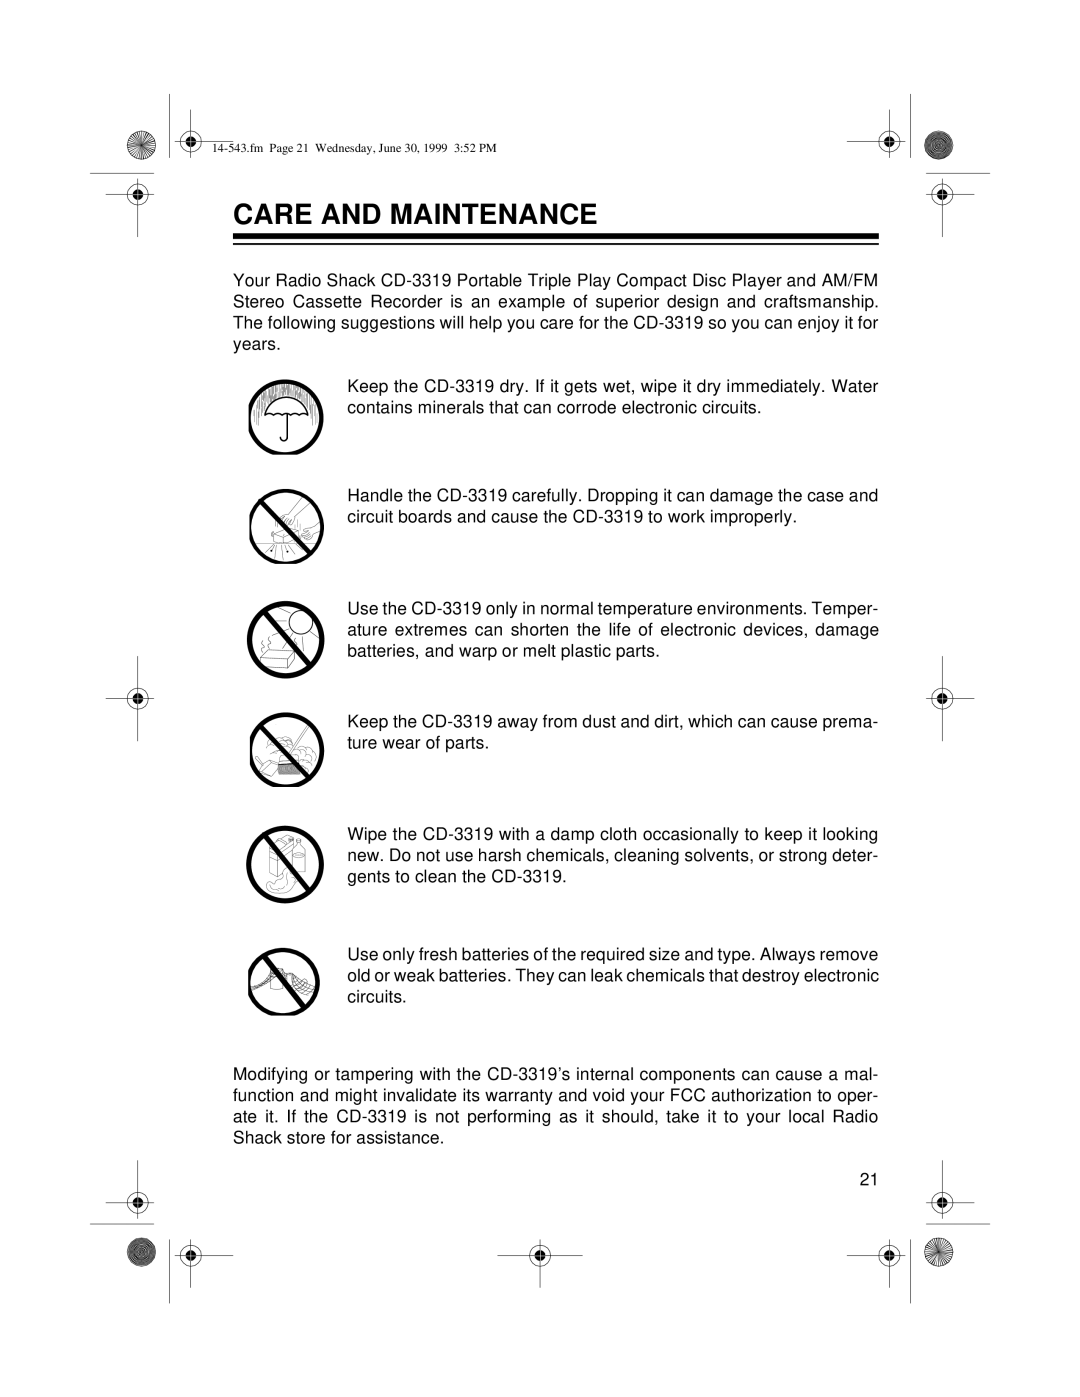 Radio Shack CD-3319 owner manual Care And Maintenance 